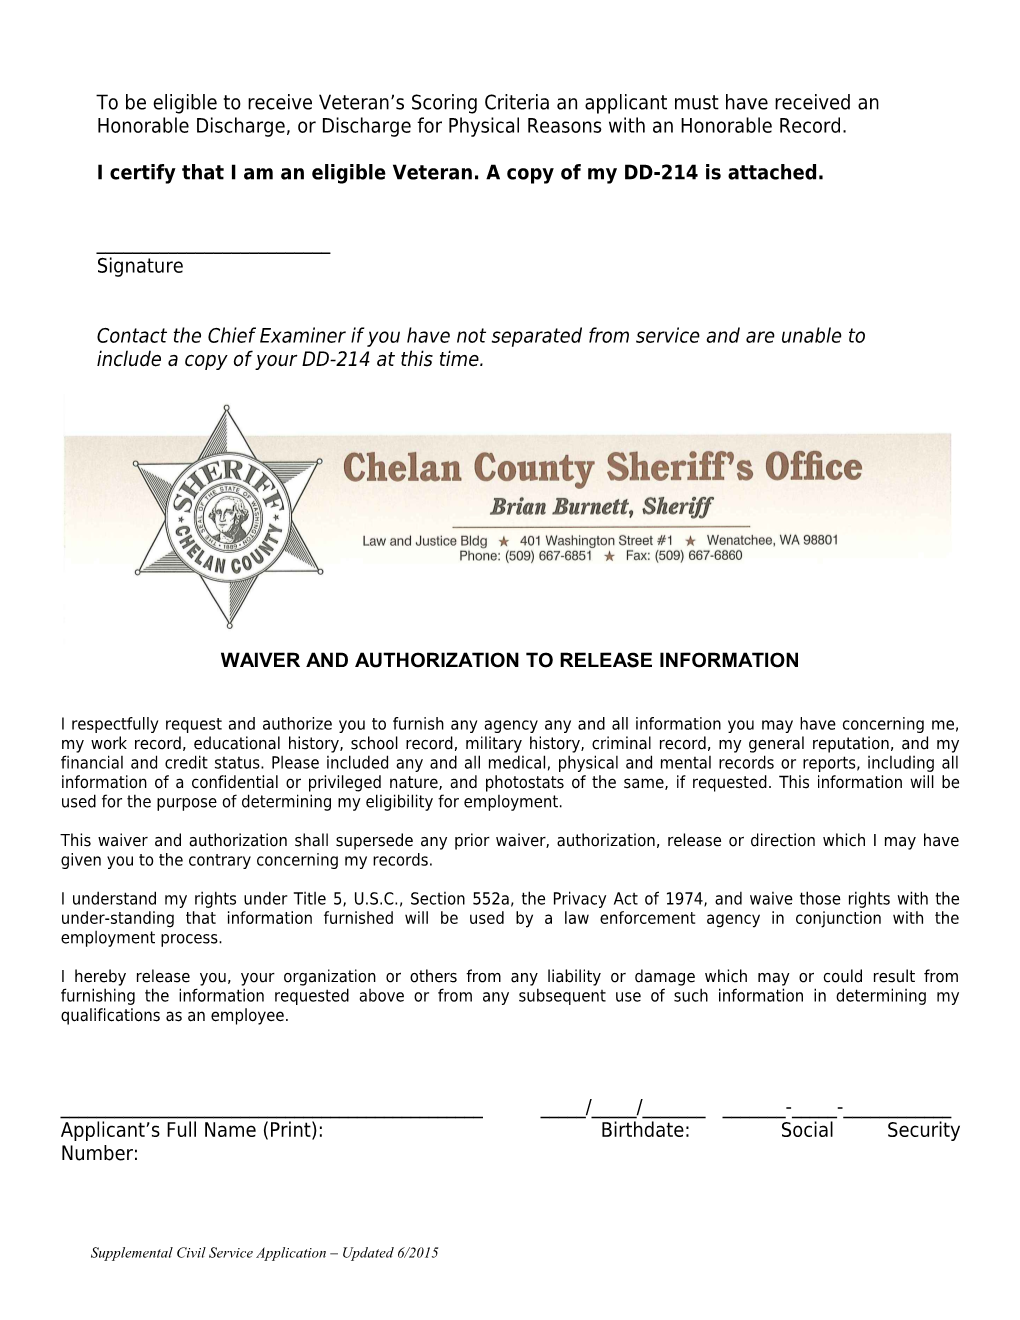 Chelan County Civil Service Commission